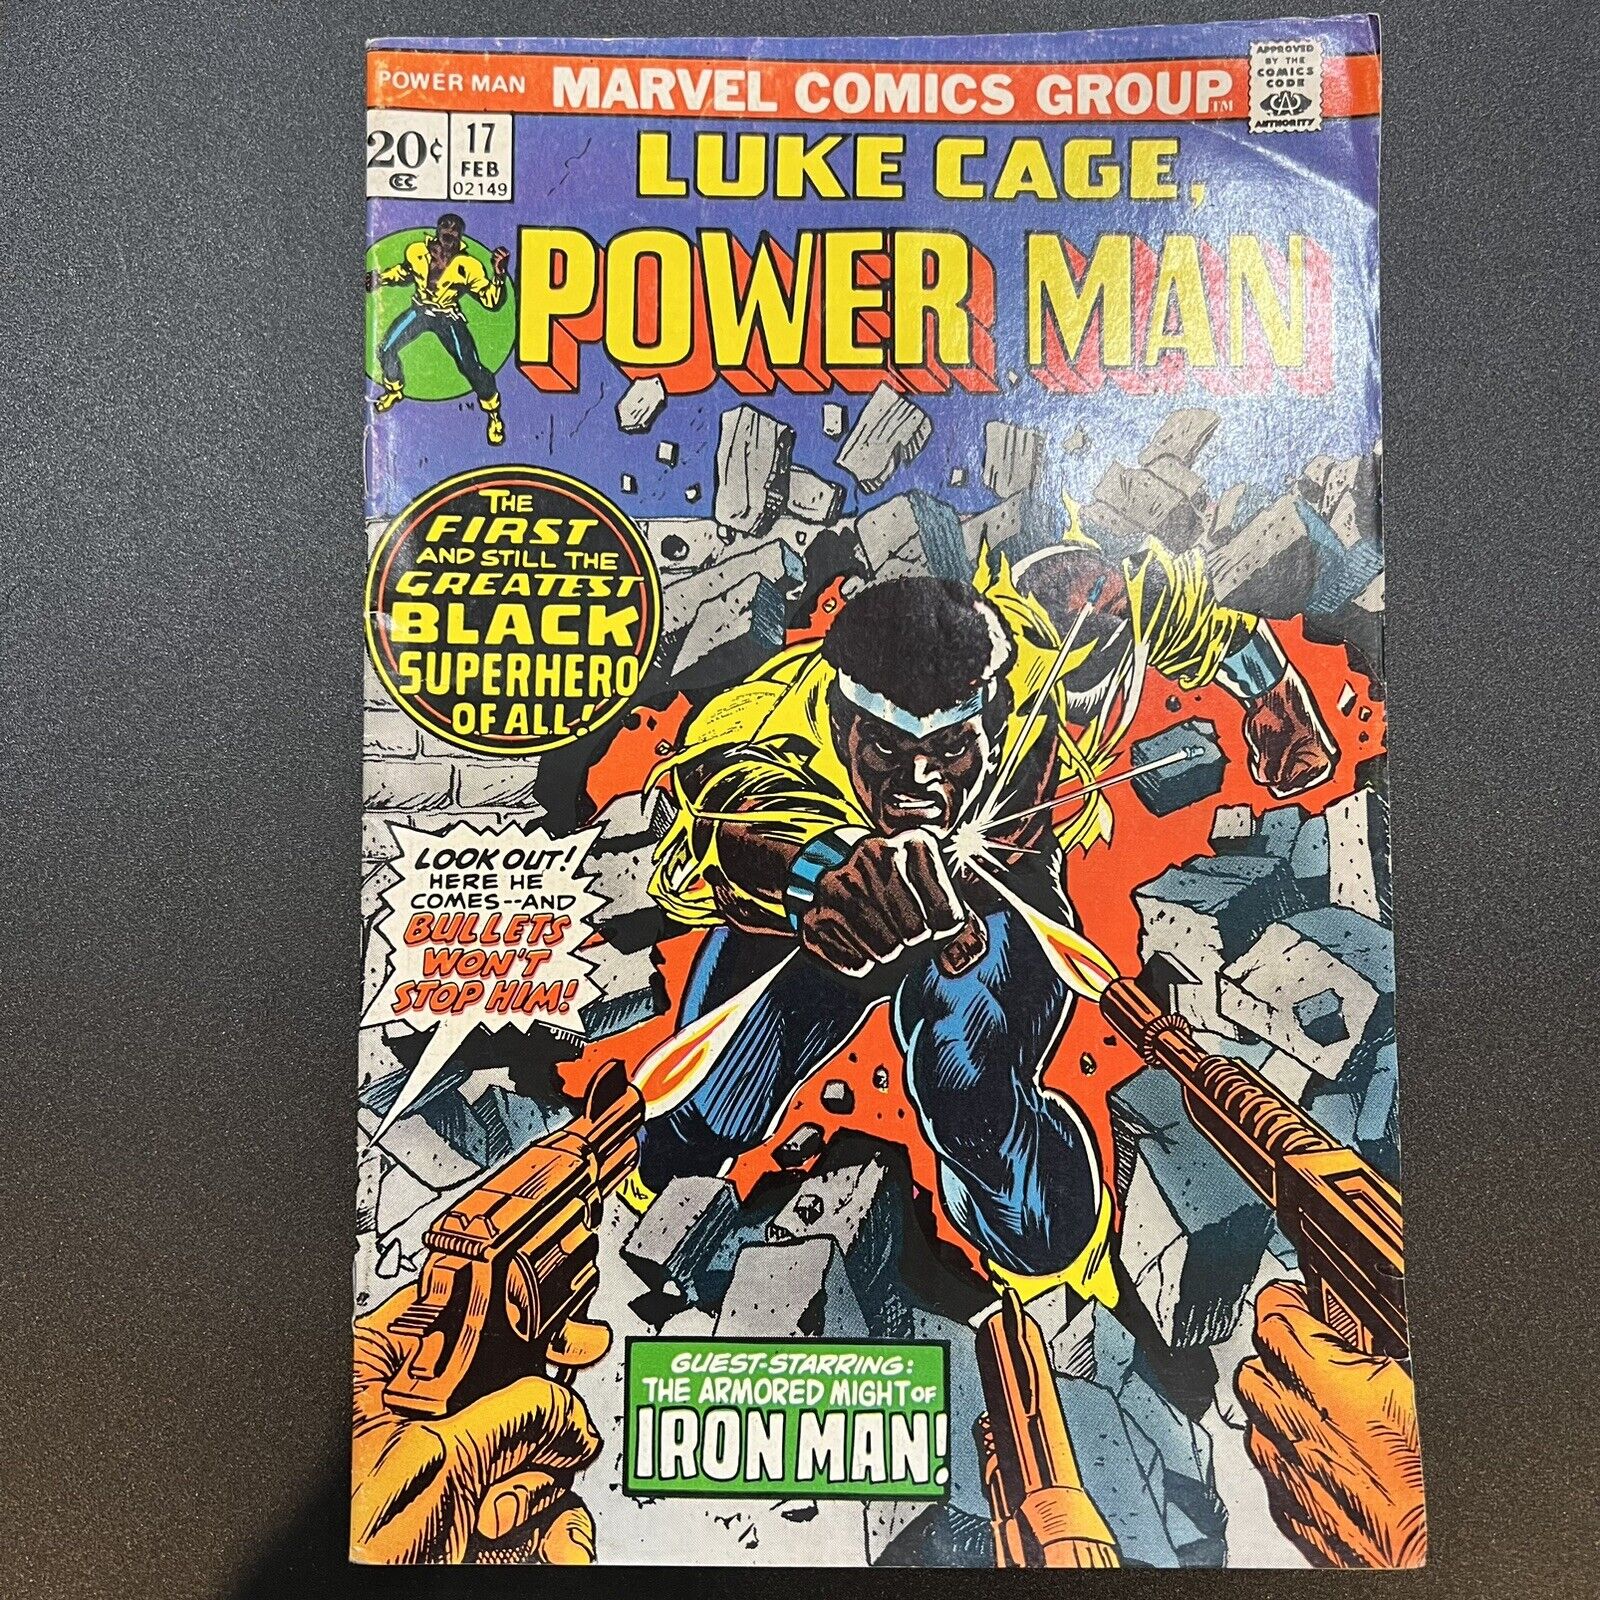 Power Man #17 - 1st Luke Cage Power Man Issue (Marvel, 1974)